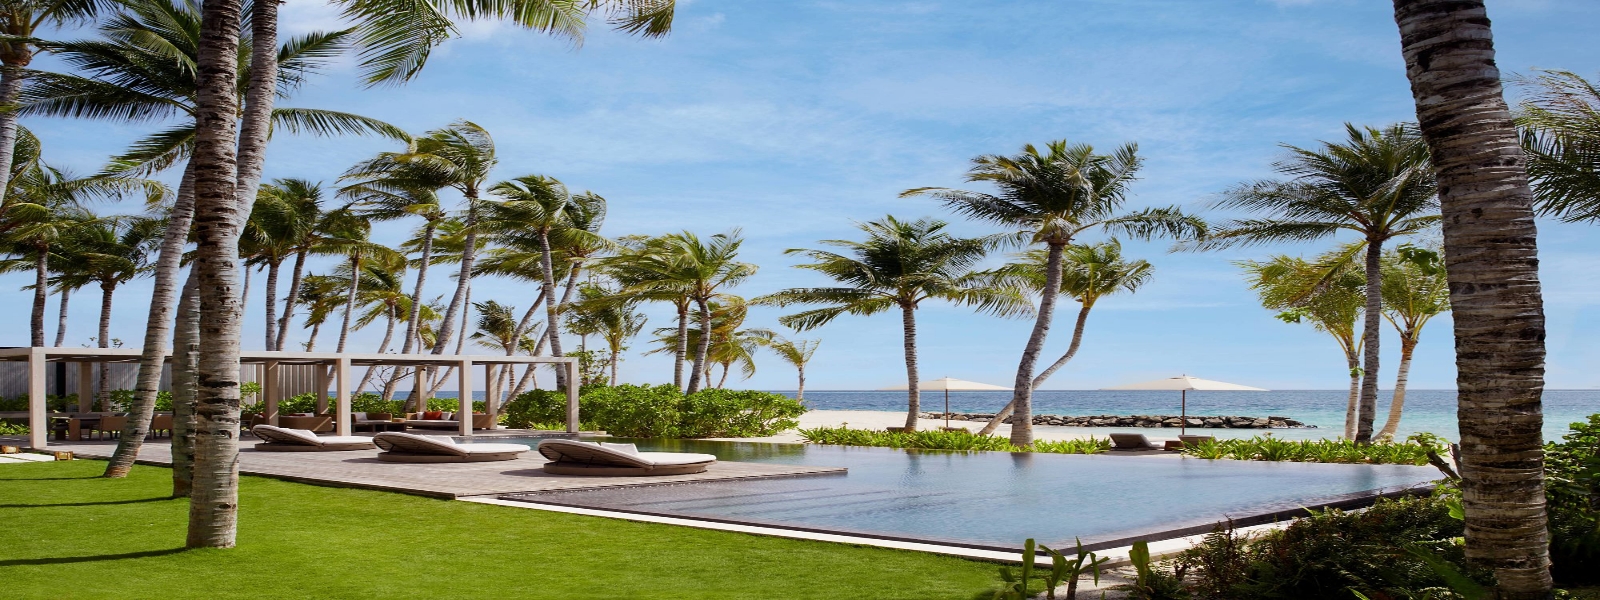 The Ritz Carlton Estate at Ritz Carlton Maldives, Fari Islands - Budget ...